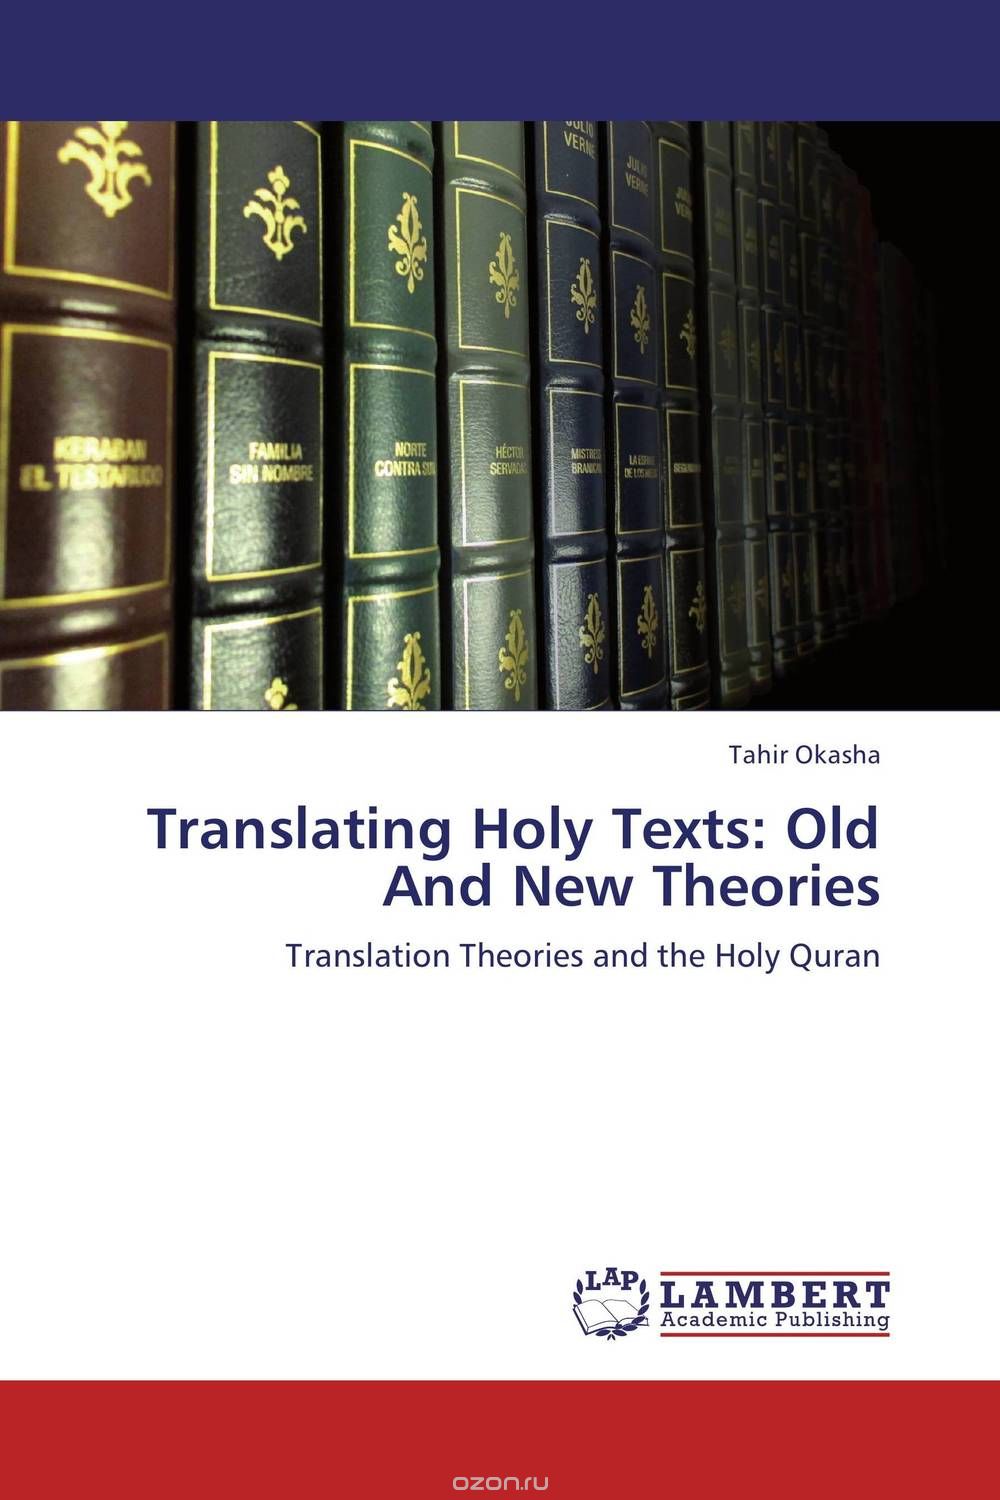 Скачать книгу "Translating Holy Texts: Old And New Theories"